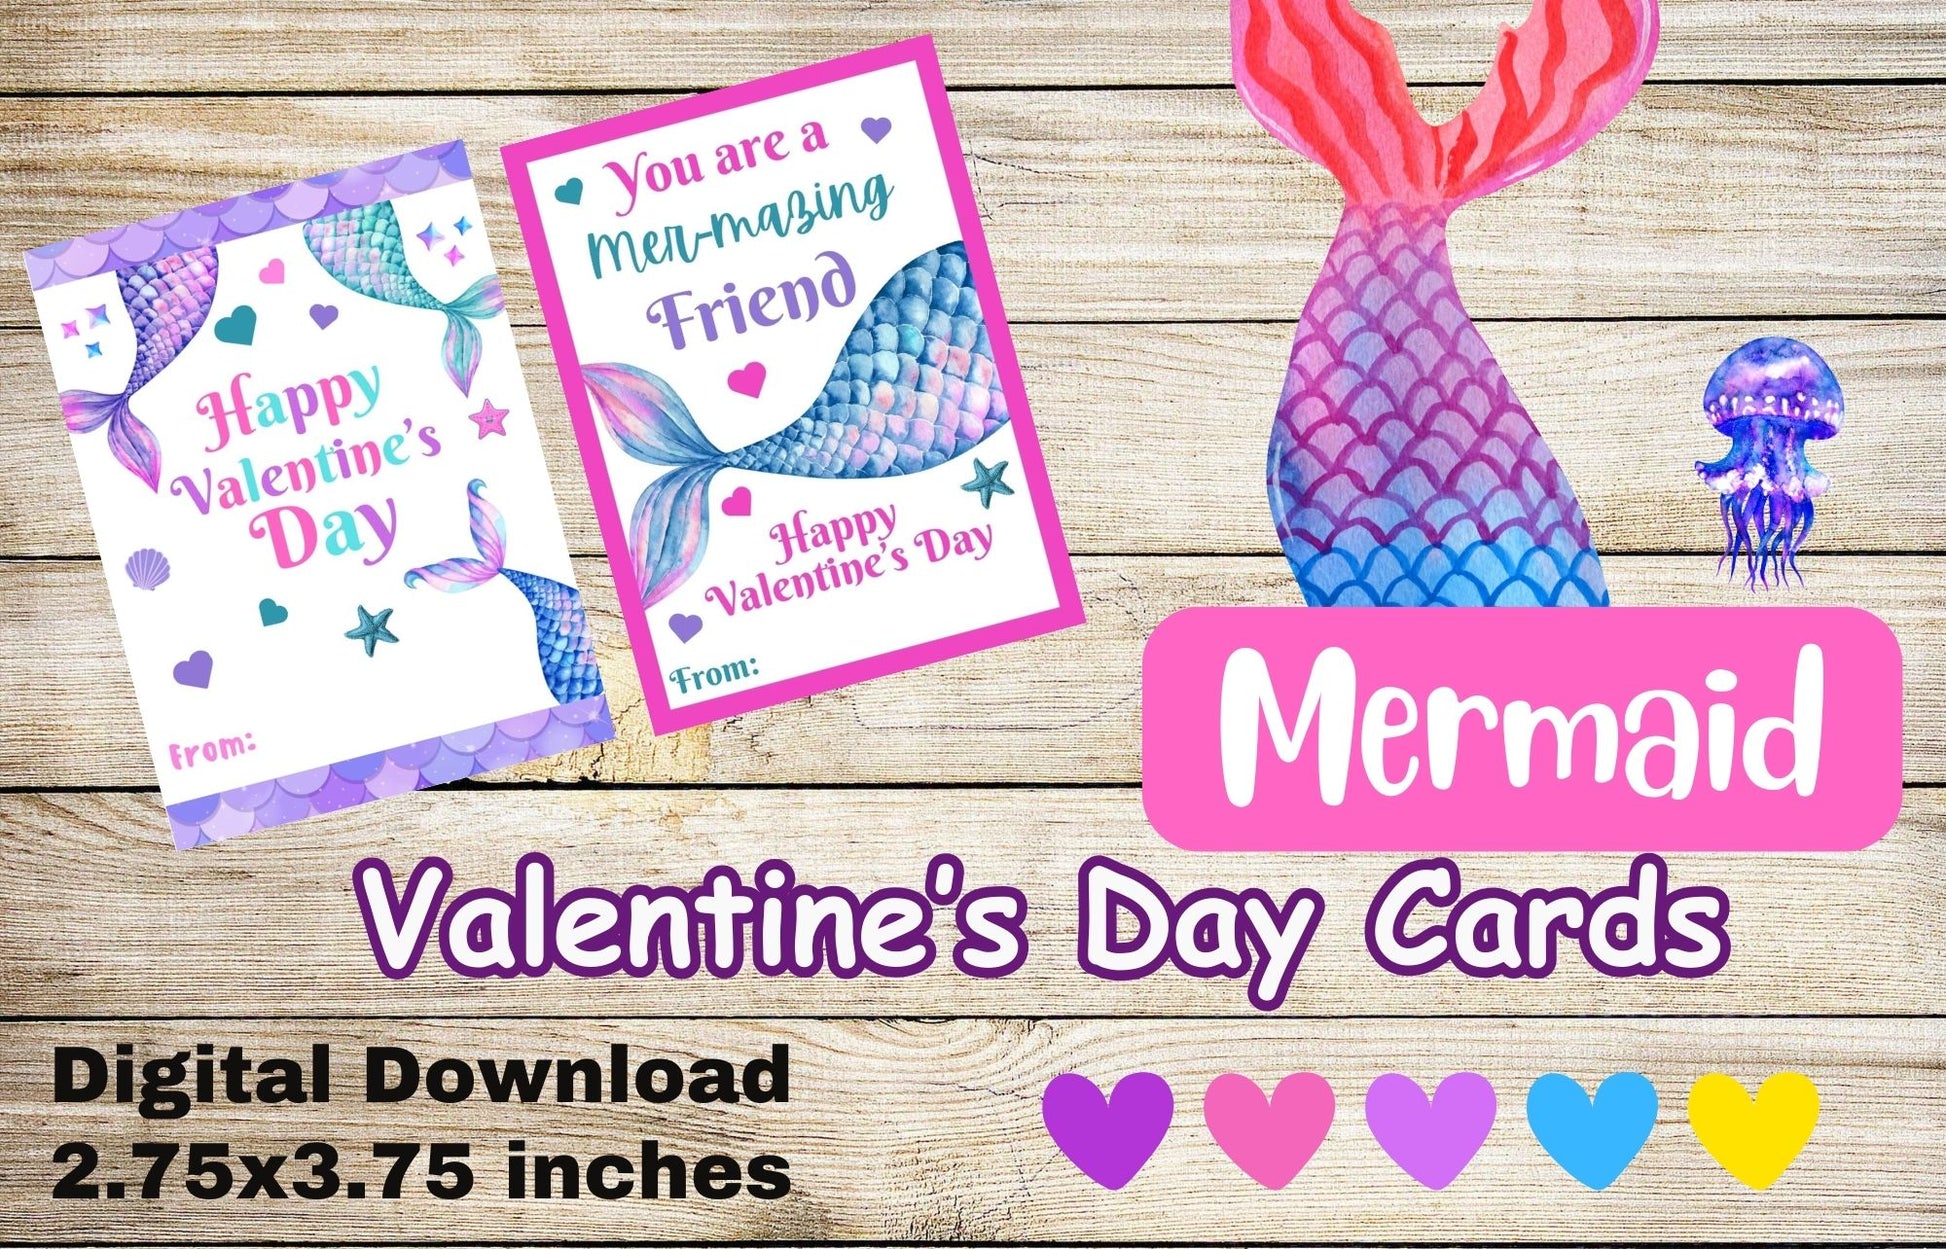 Mermaid Valentine's Day Cards